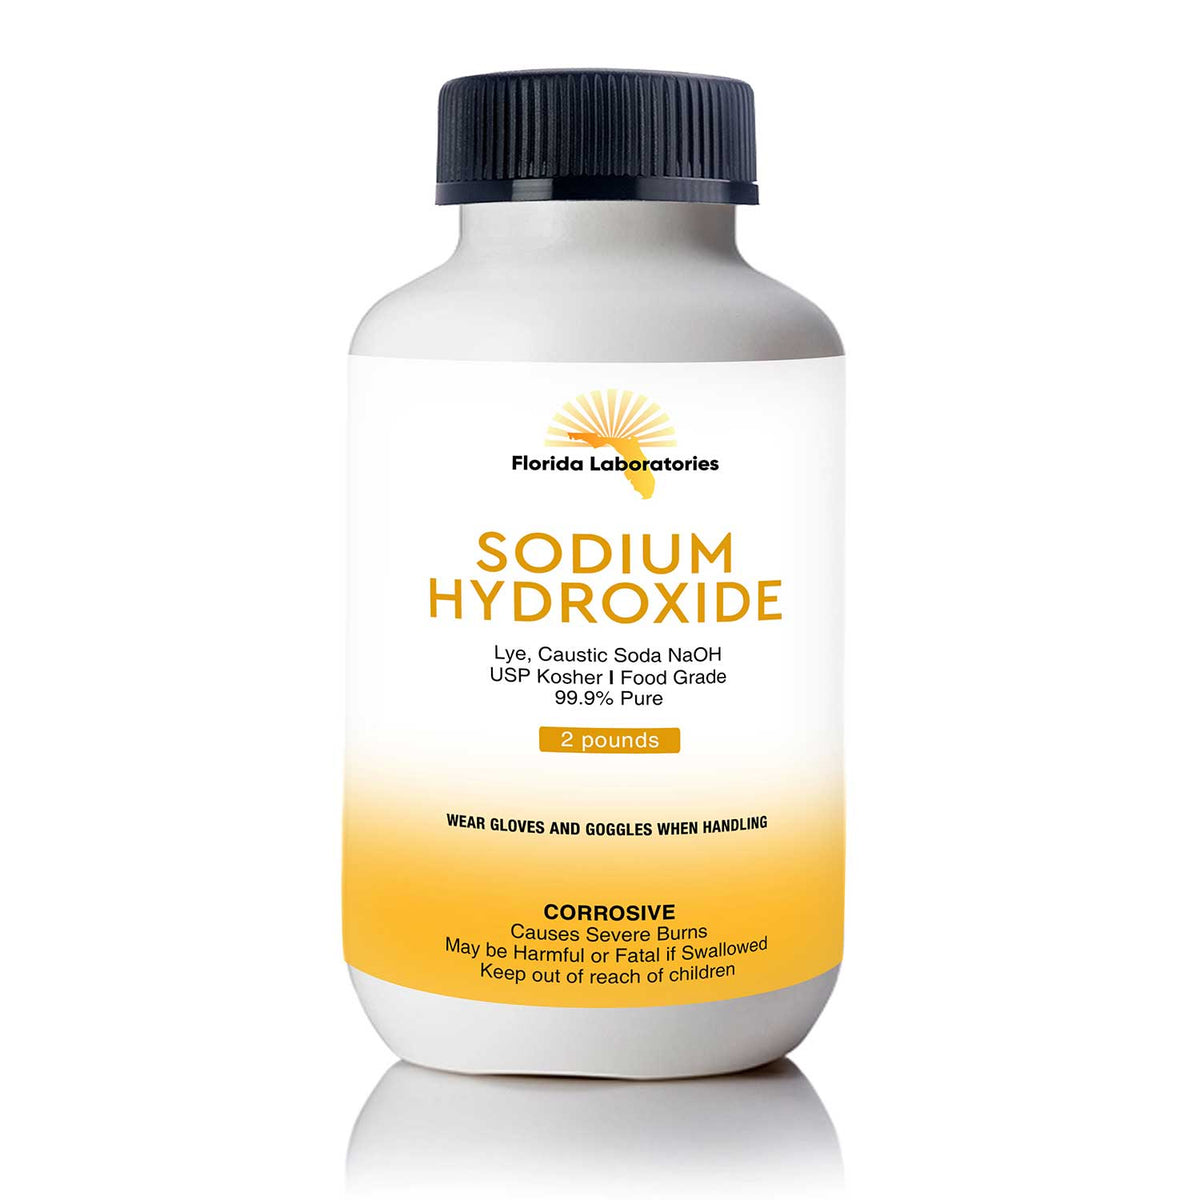 LYE - Sodium Hydroxide - milehighsoap